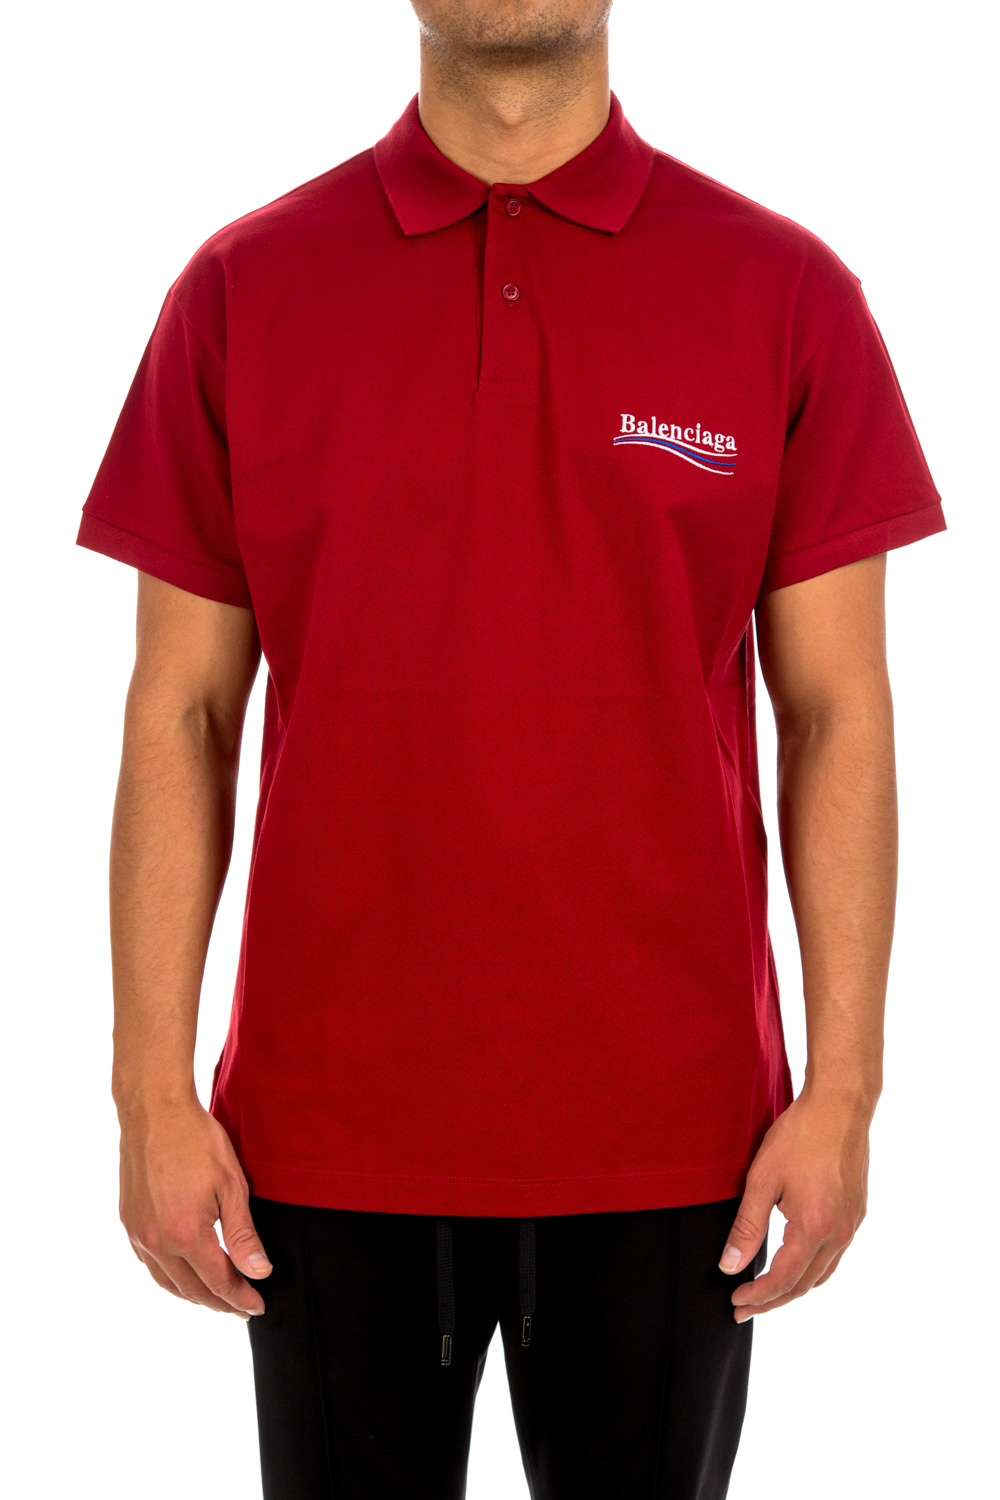 Balenciaga Speedhunter-print Cotton Shirt RUB) Liked On Polyvore Featuring Men's Fashion, M… Cotton Polo Shirt, Printed Polo Shirts, Red Polo Shirt | xn--90absbknhbvge.xn--p1ai:443